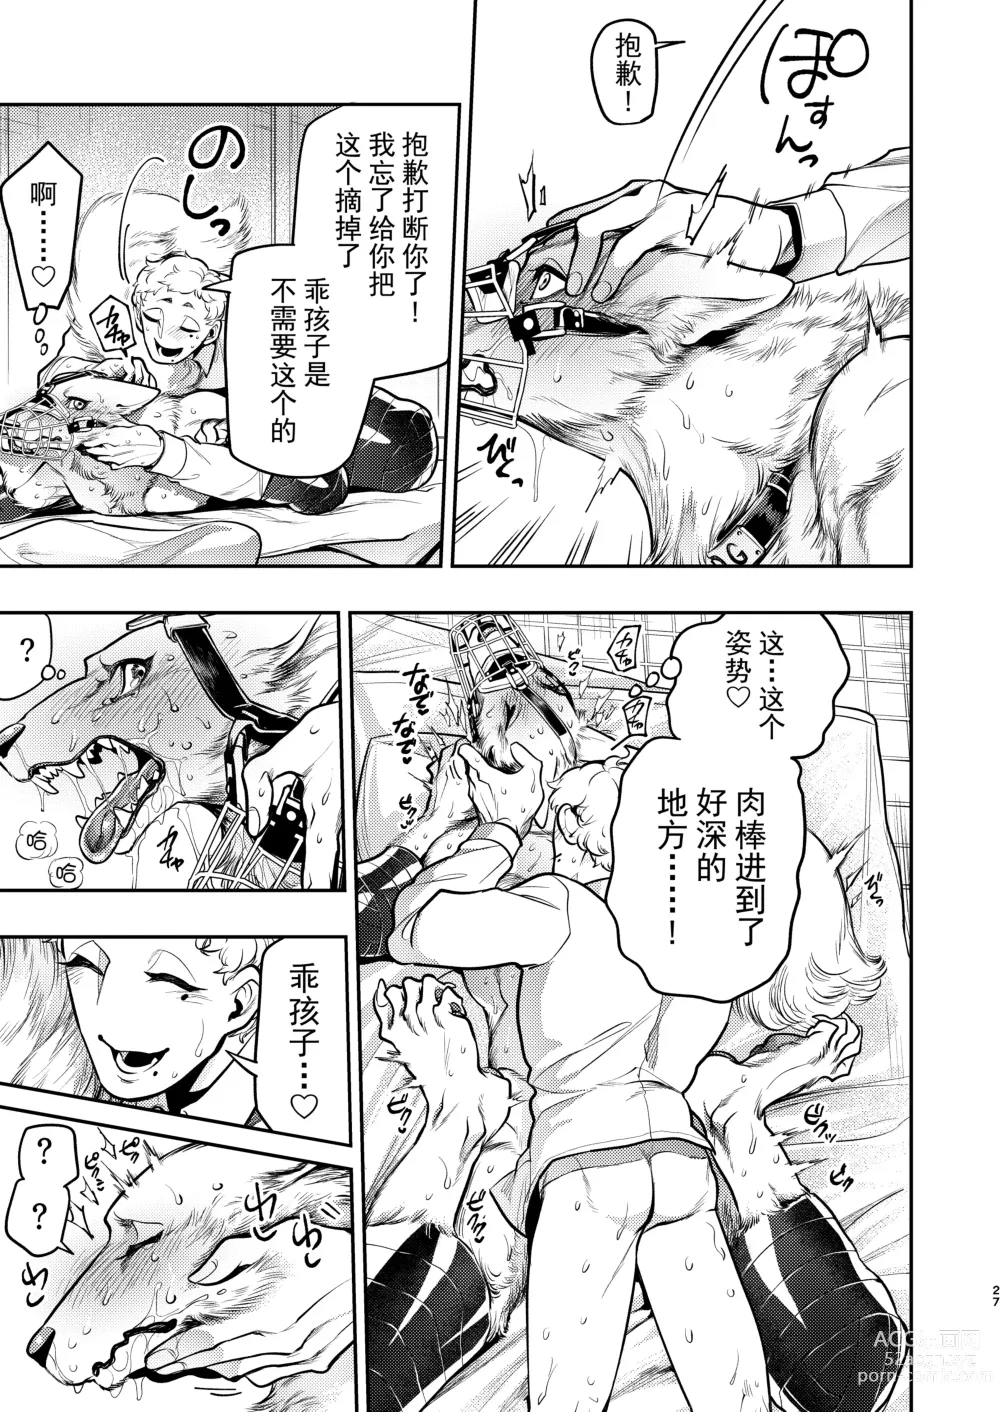 Page 26 of doujinshi Ookami Juujin, Ningen Fuuzoku e Iku